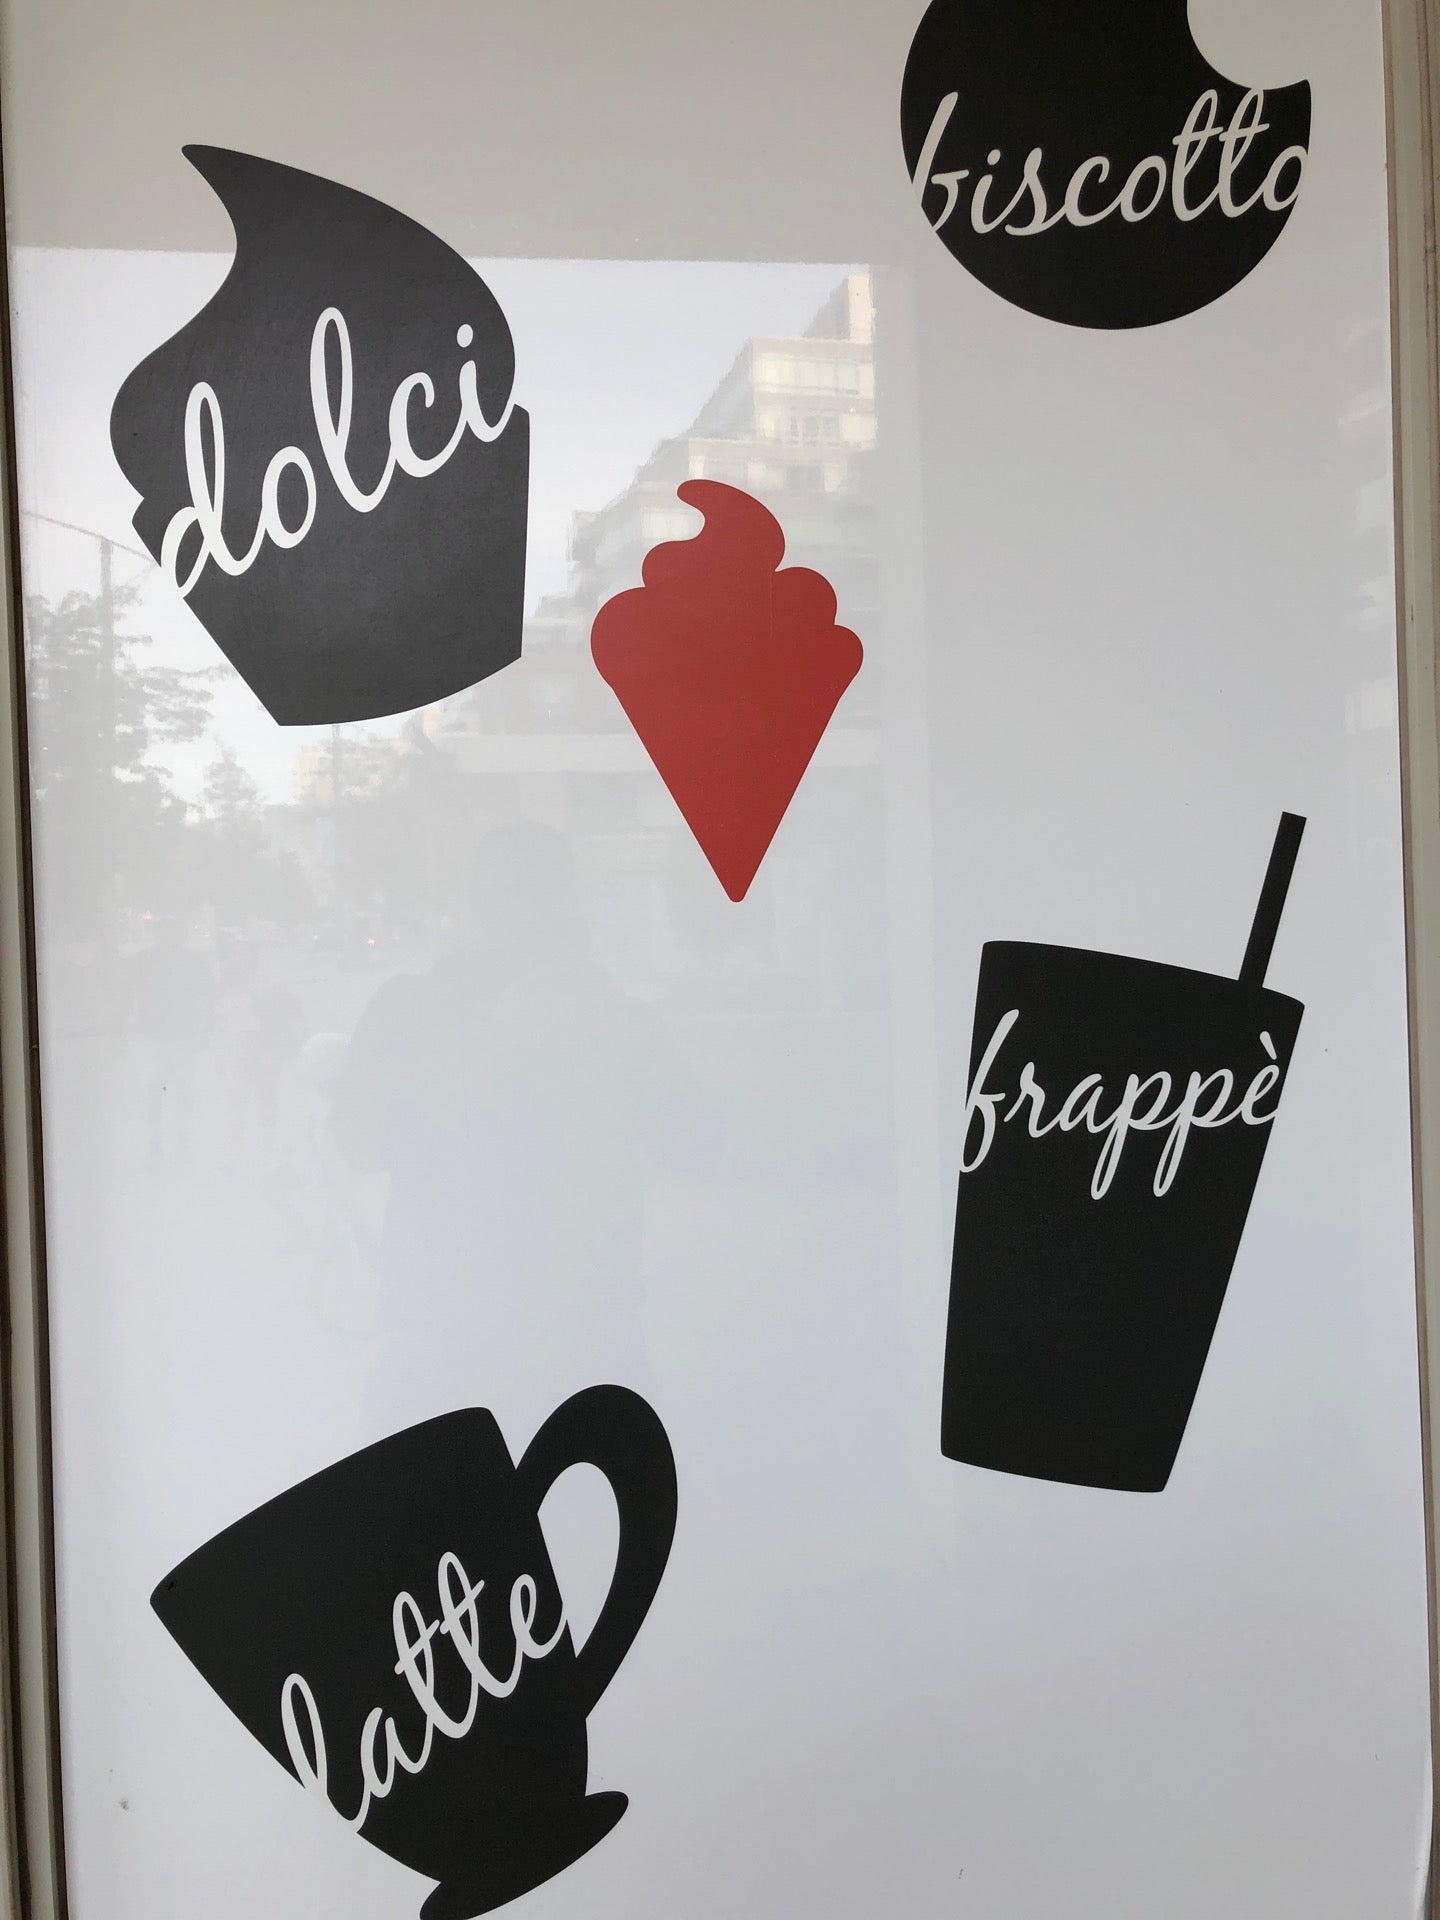 Touti Gelati and Cafe